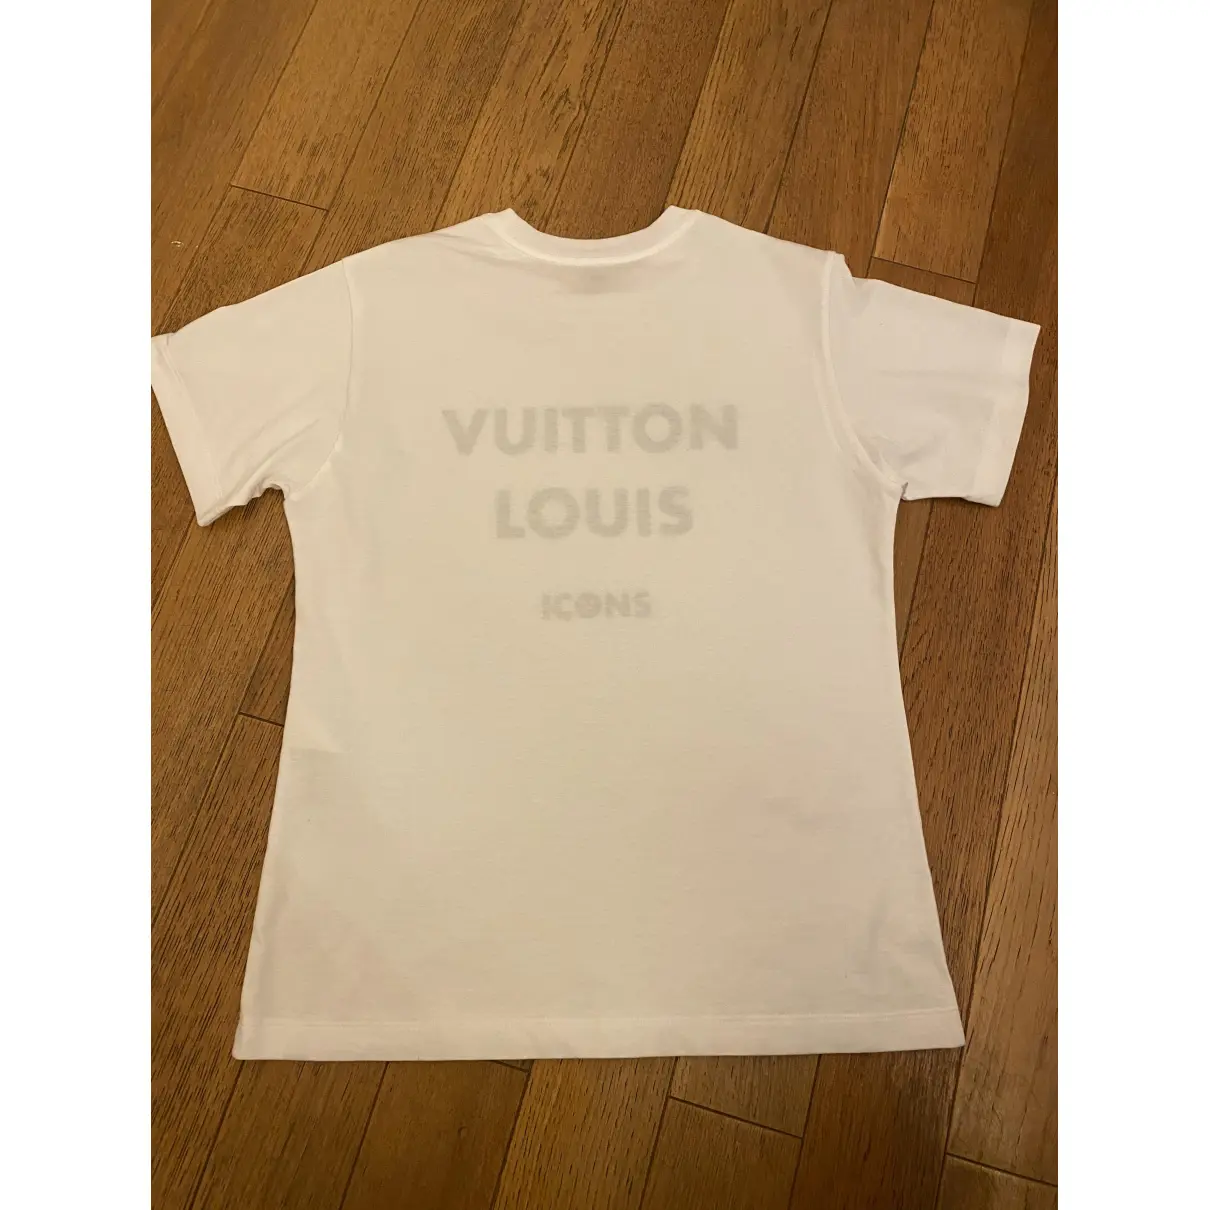 Buy Louis Vuitton White Cotton Top online